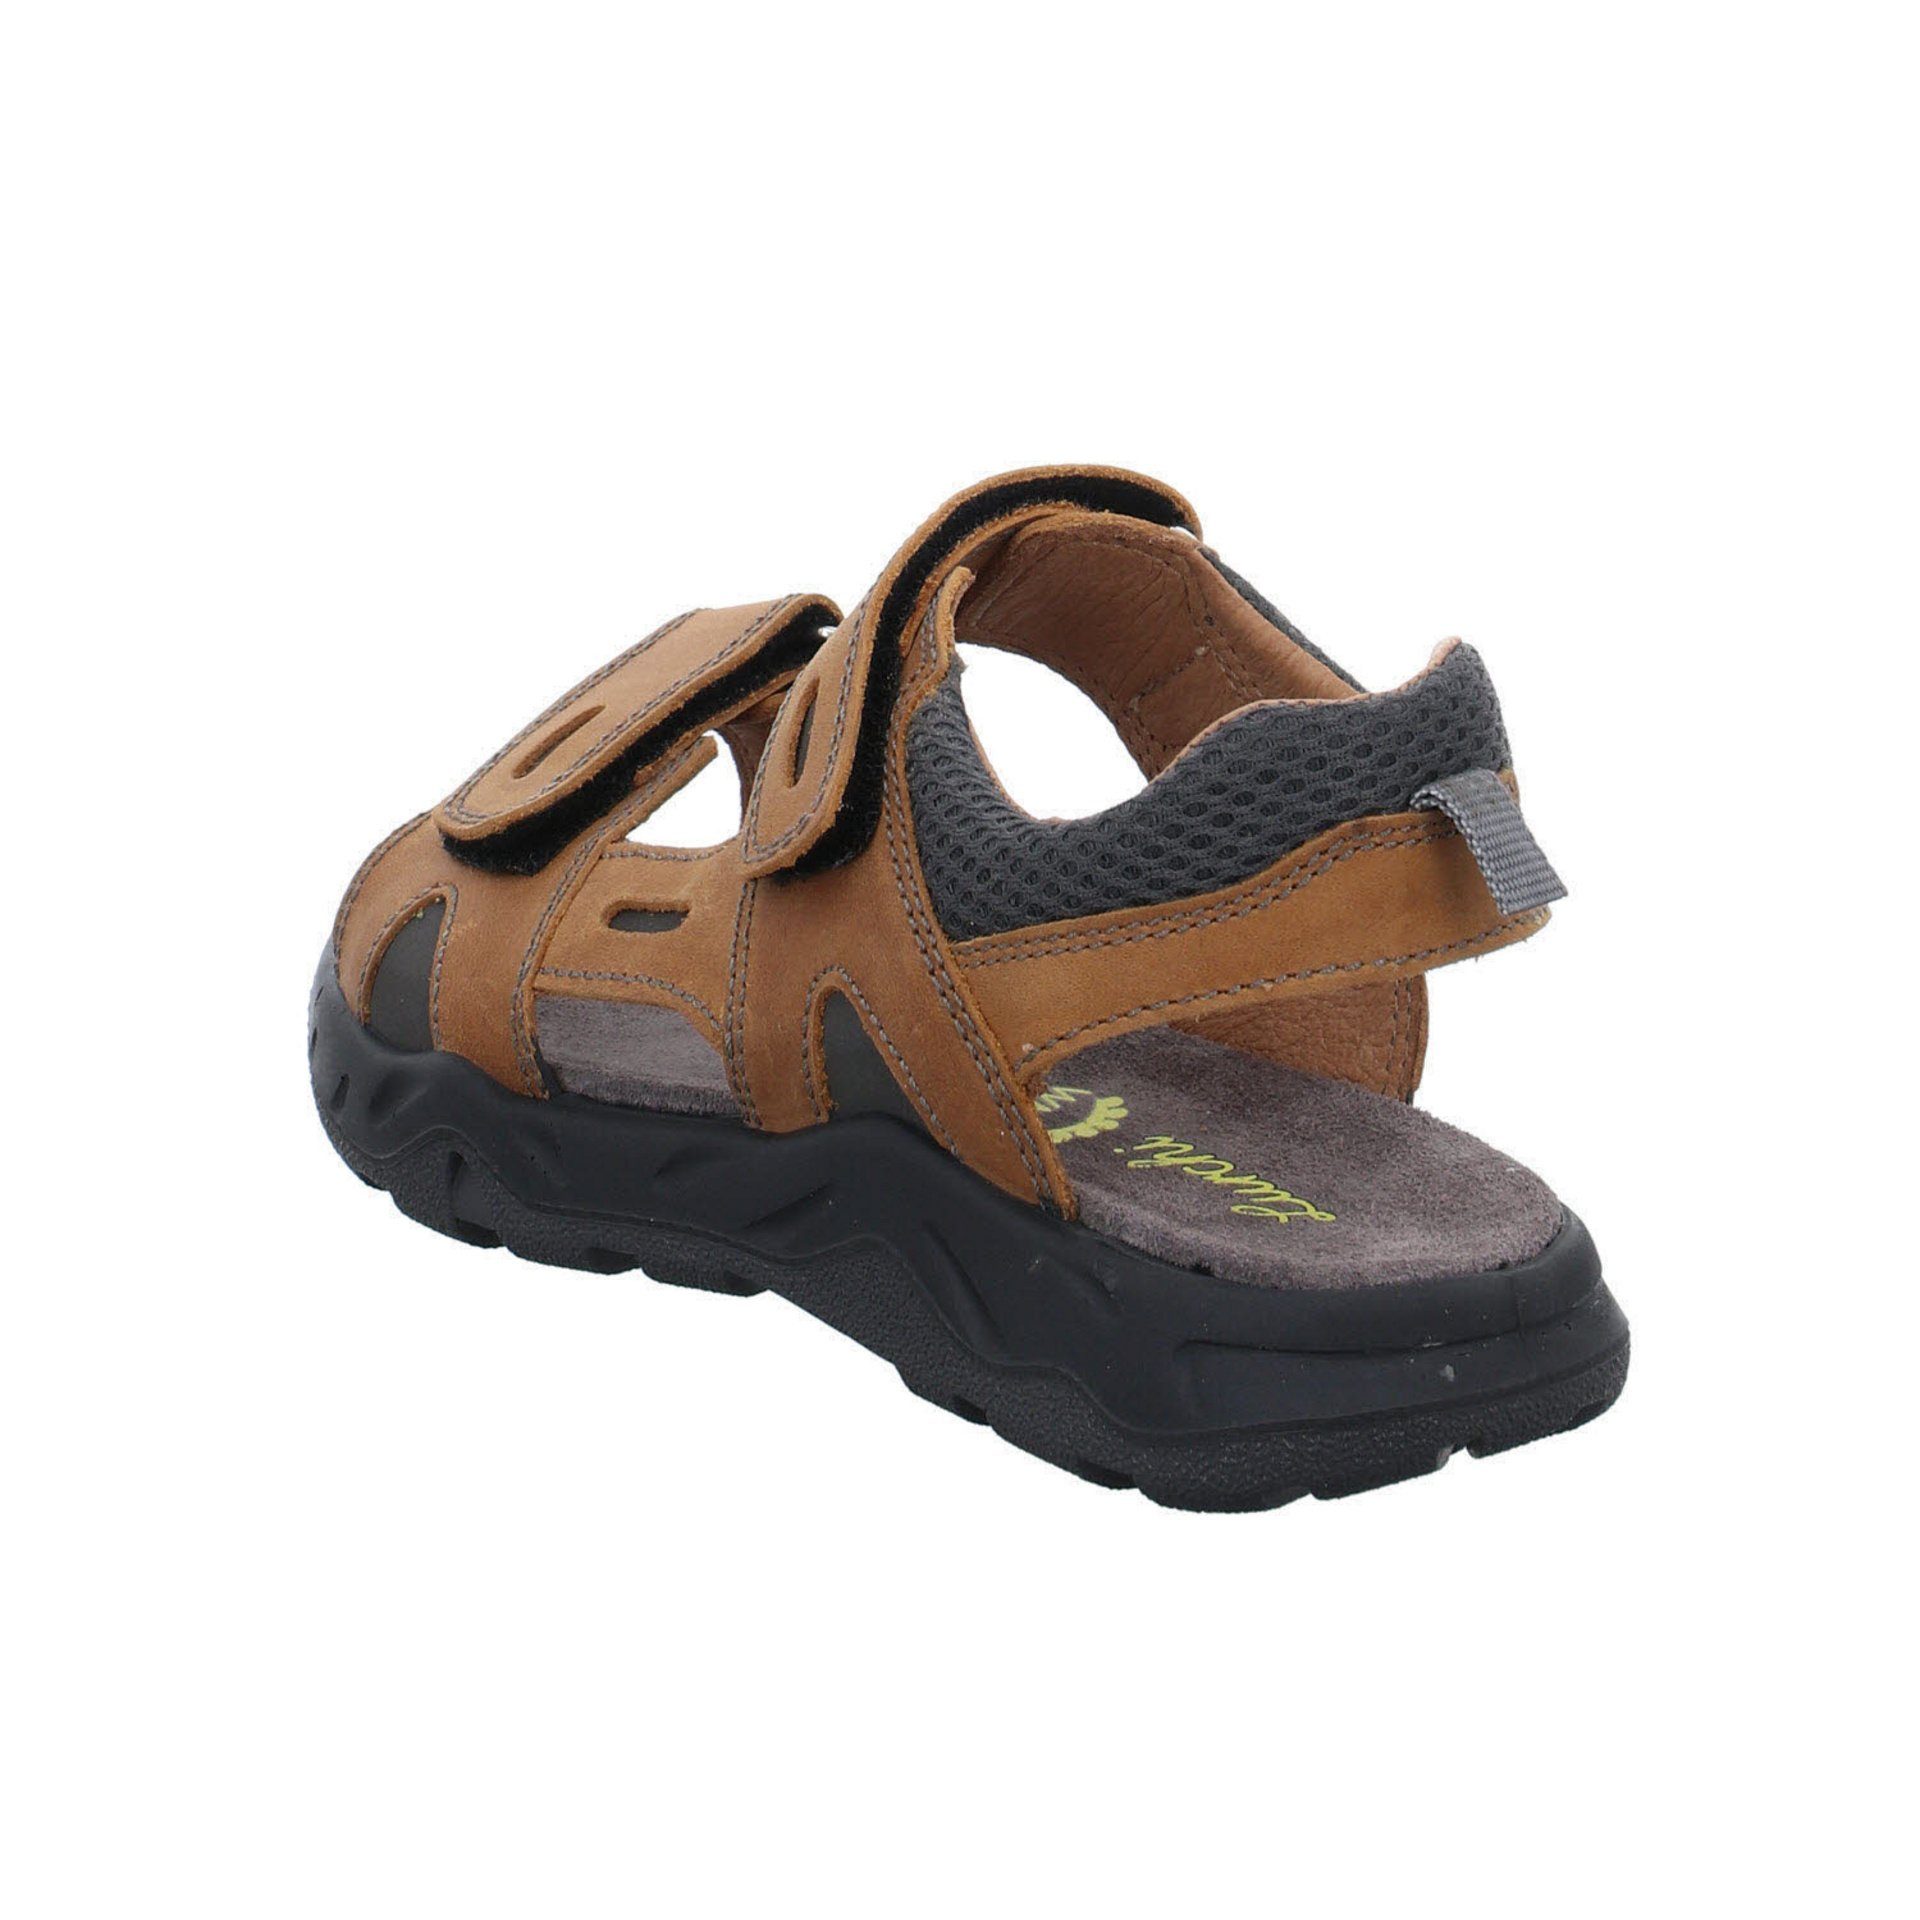 Lurchi Jungen Sandalen Owen Schuhe Kinderschuhe Sandale Leder-/Textilkombination Sandale